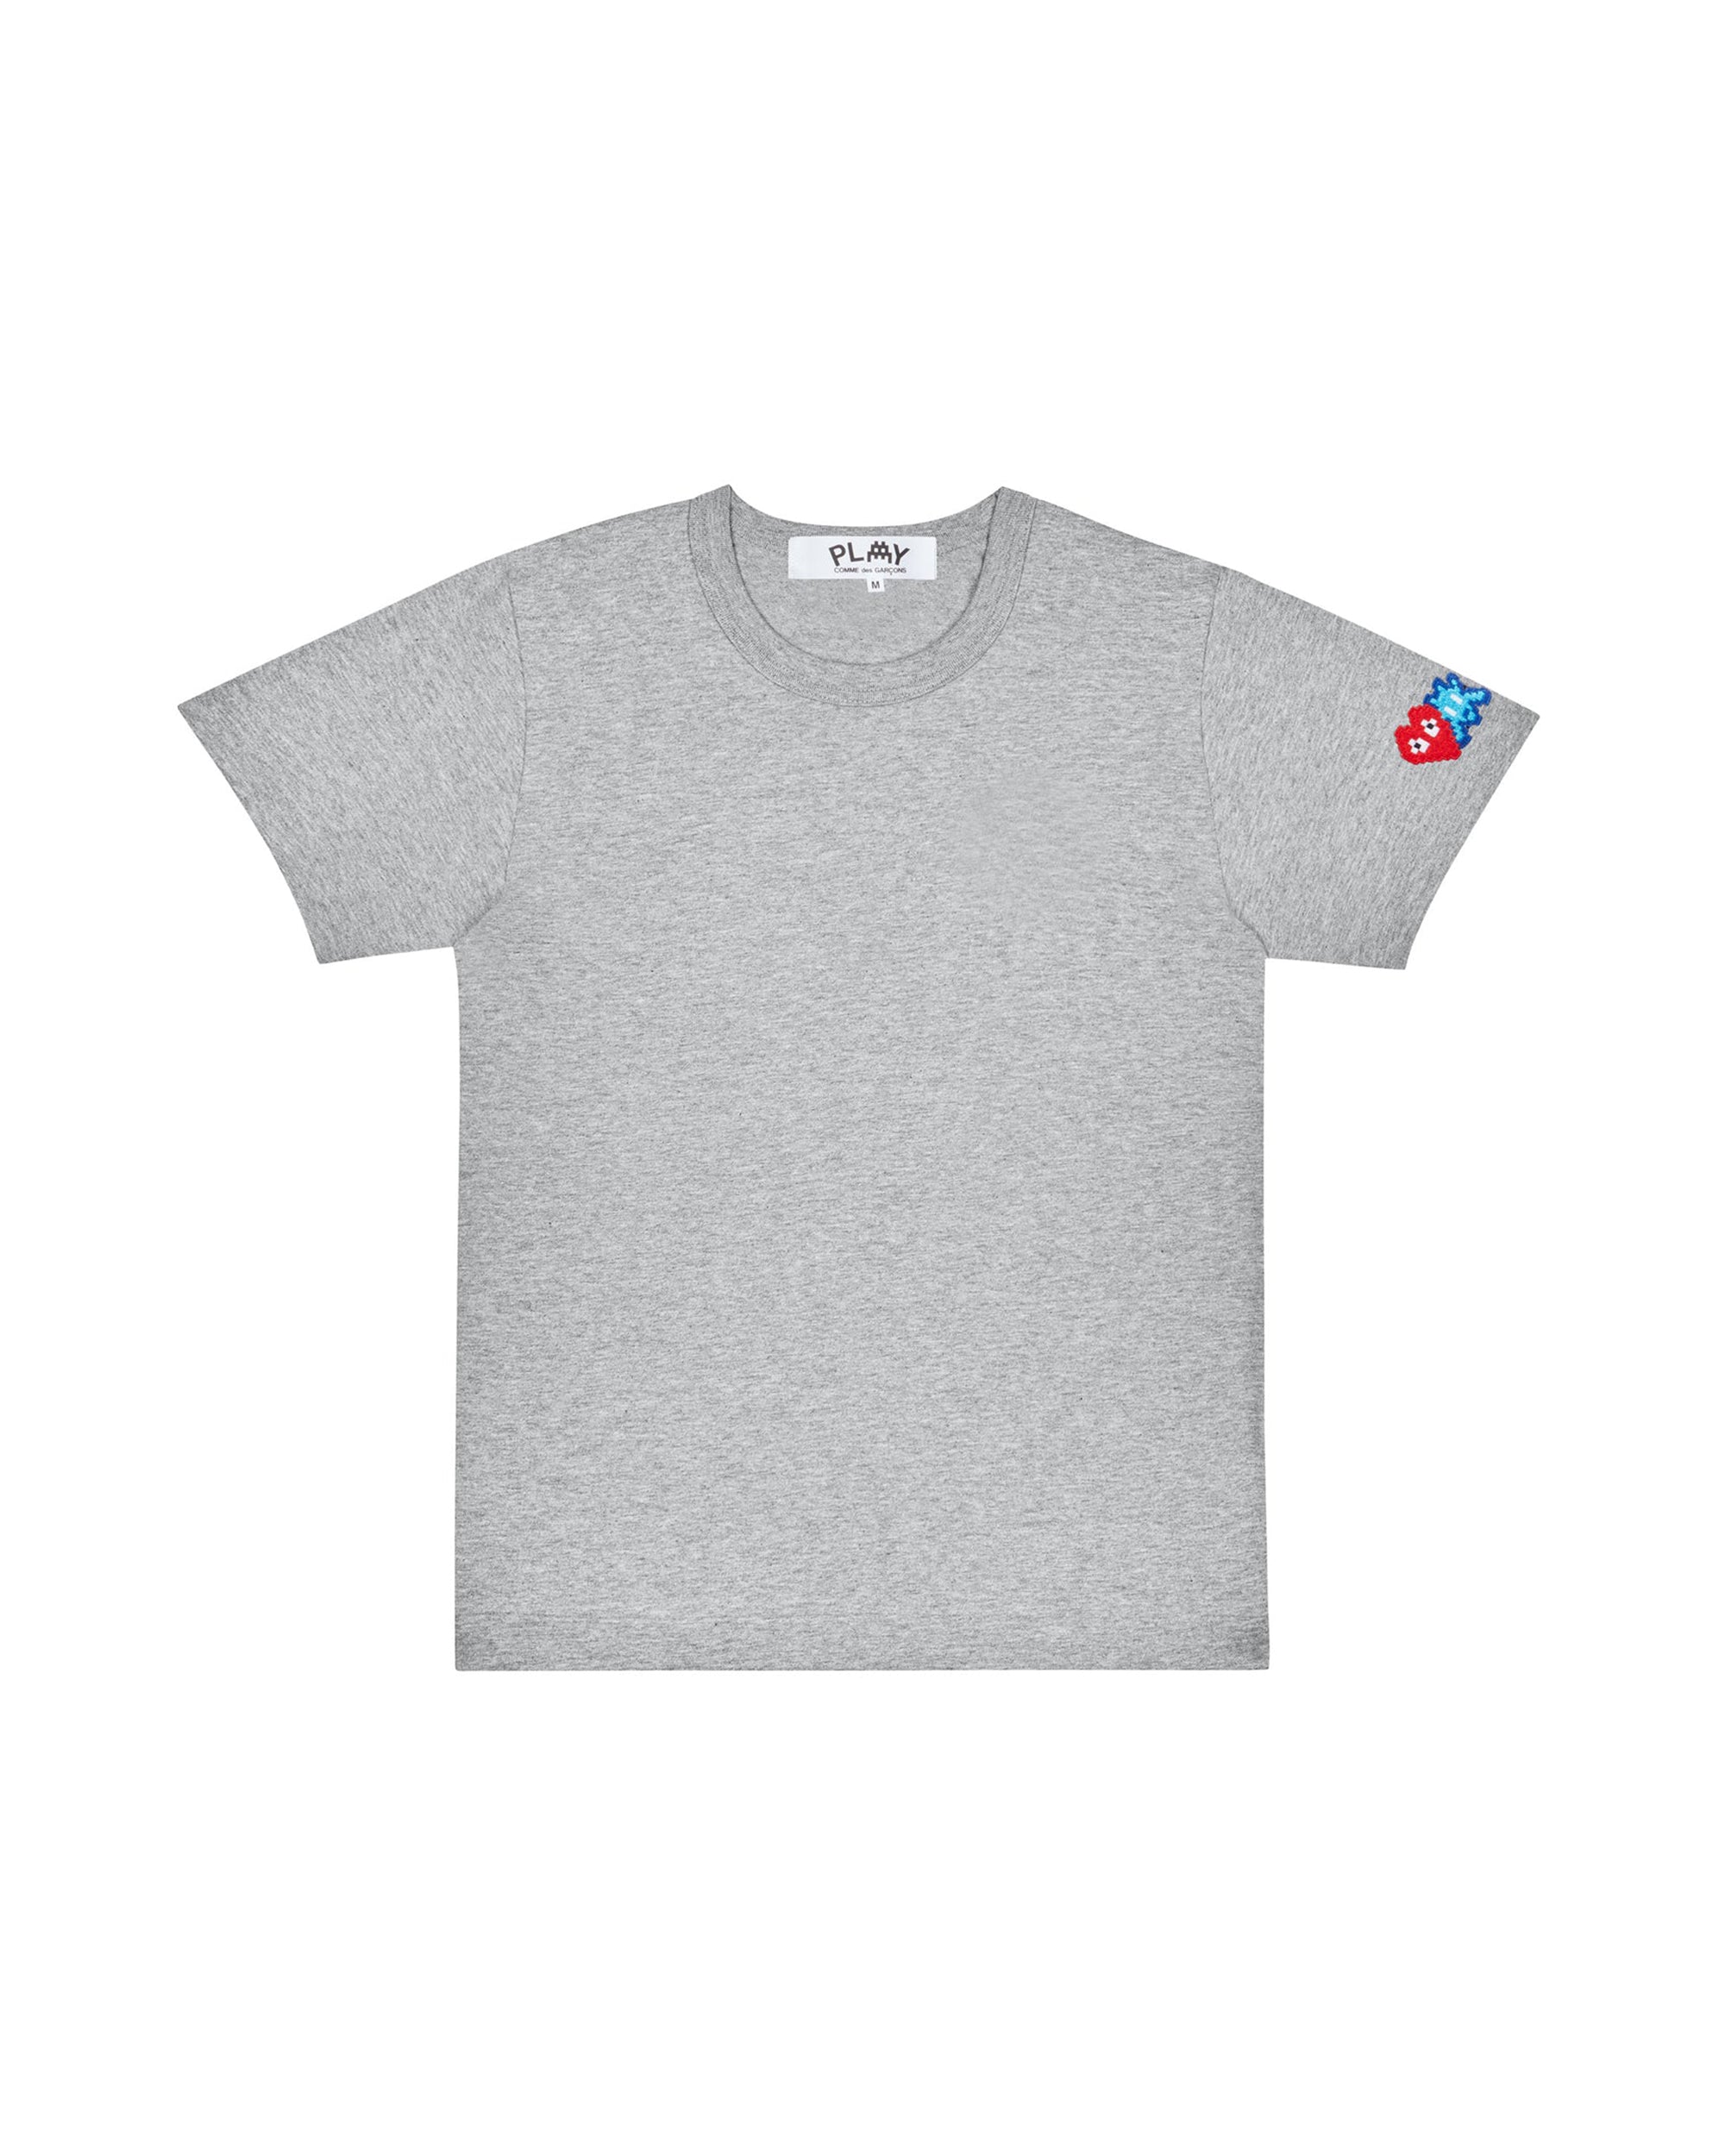 Invader T-shirt - Grey